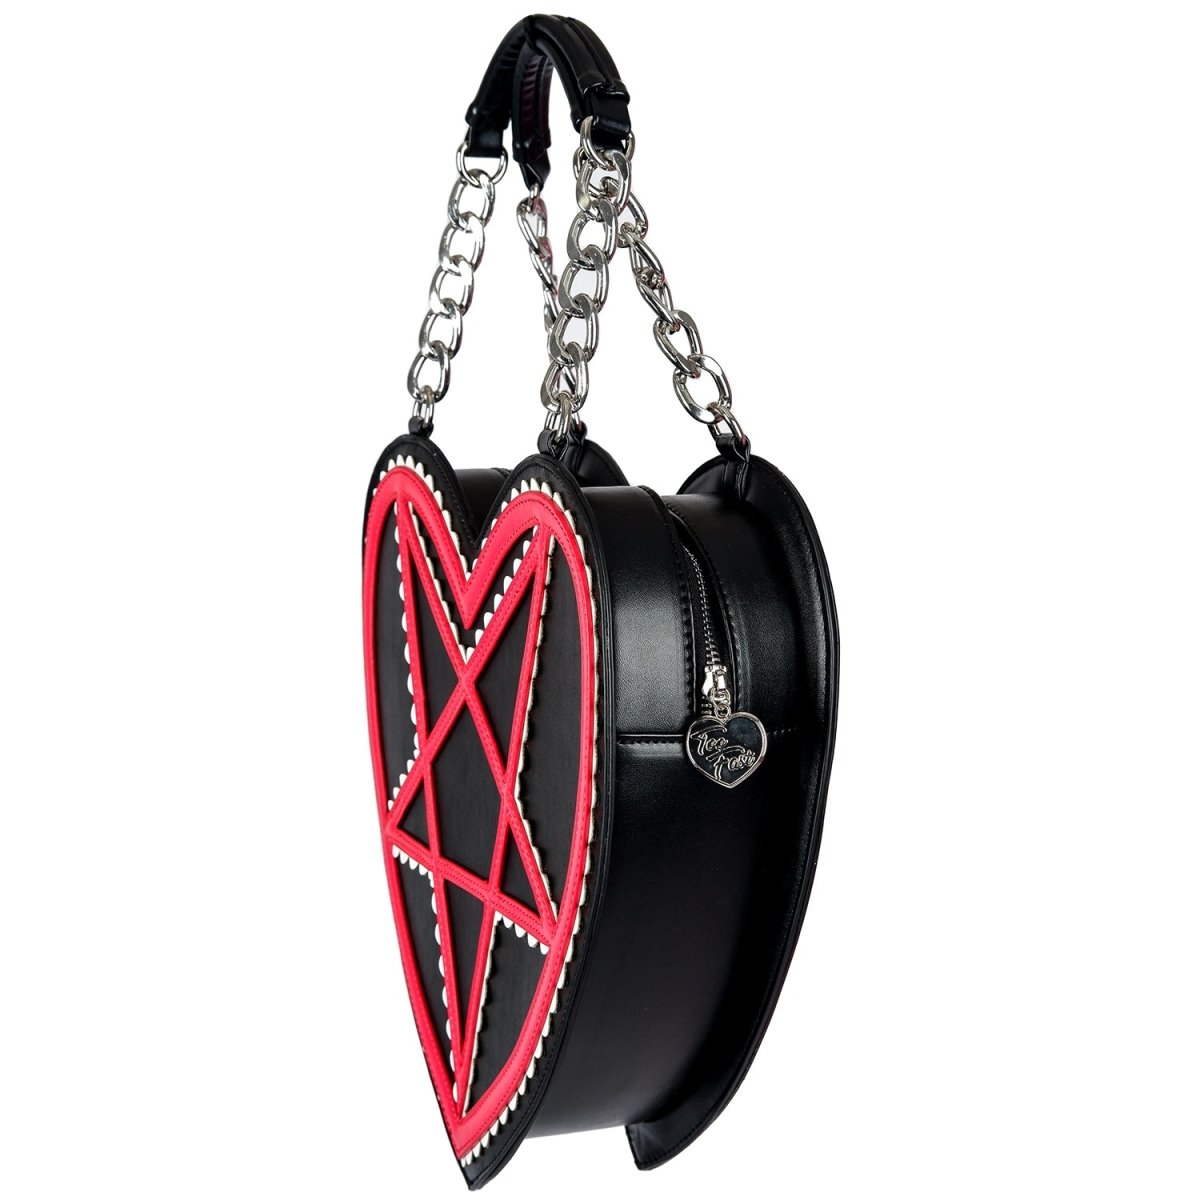 Too Fast | Red Pentagram Heart Shaped Handbag